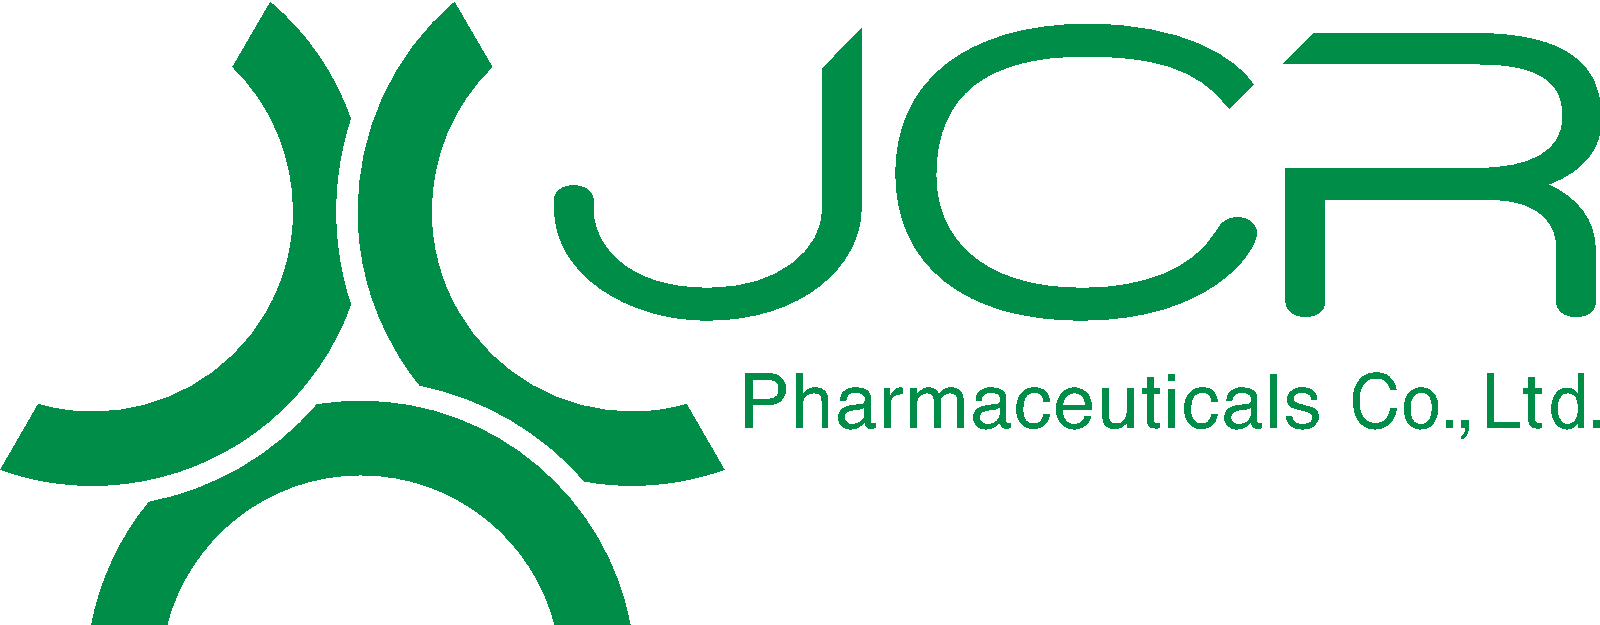 Pharmaceutical Biogenics Jcr Industry Drug Pharmaceuticals Watson PNG Image